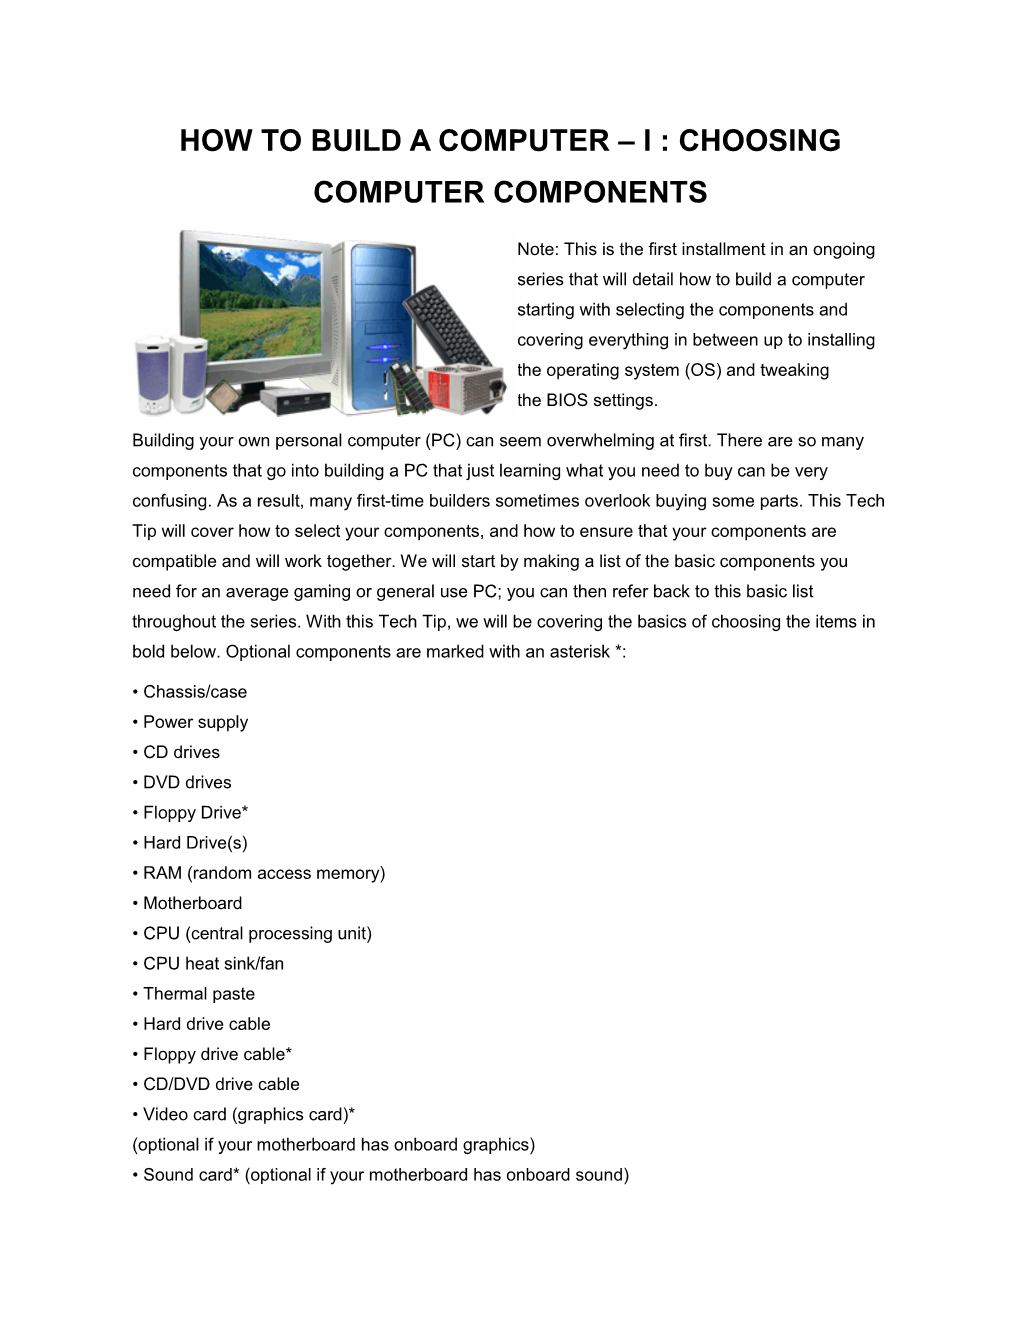 Choosing Computer Components